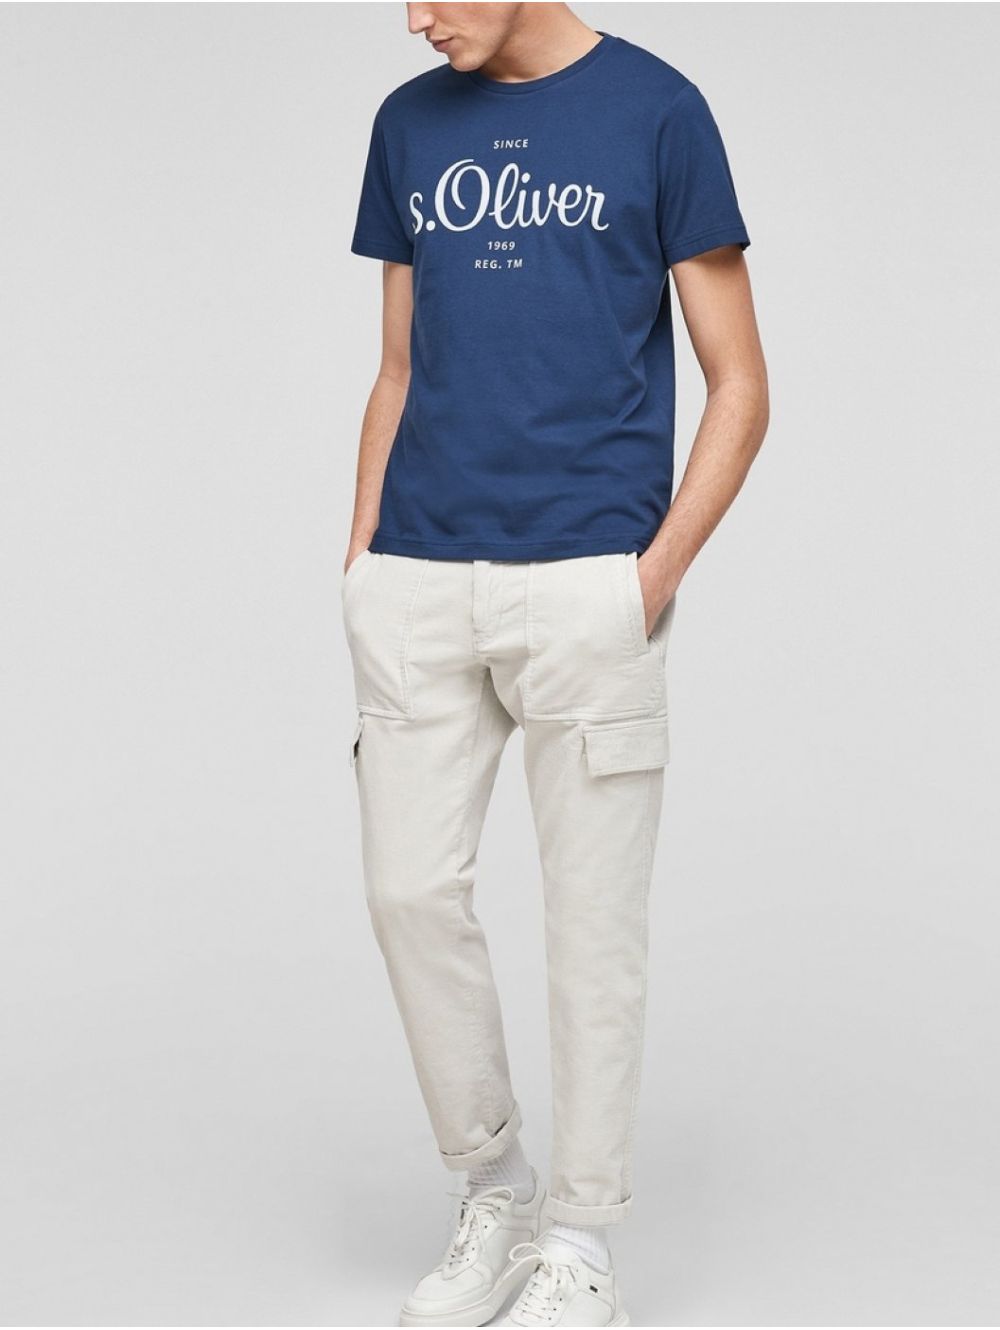 Men\'s short-sleeved Blue jersey 2057432-5693 T-Shirt S.OLIVER blue Ocean